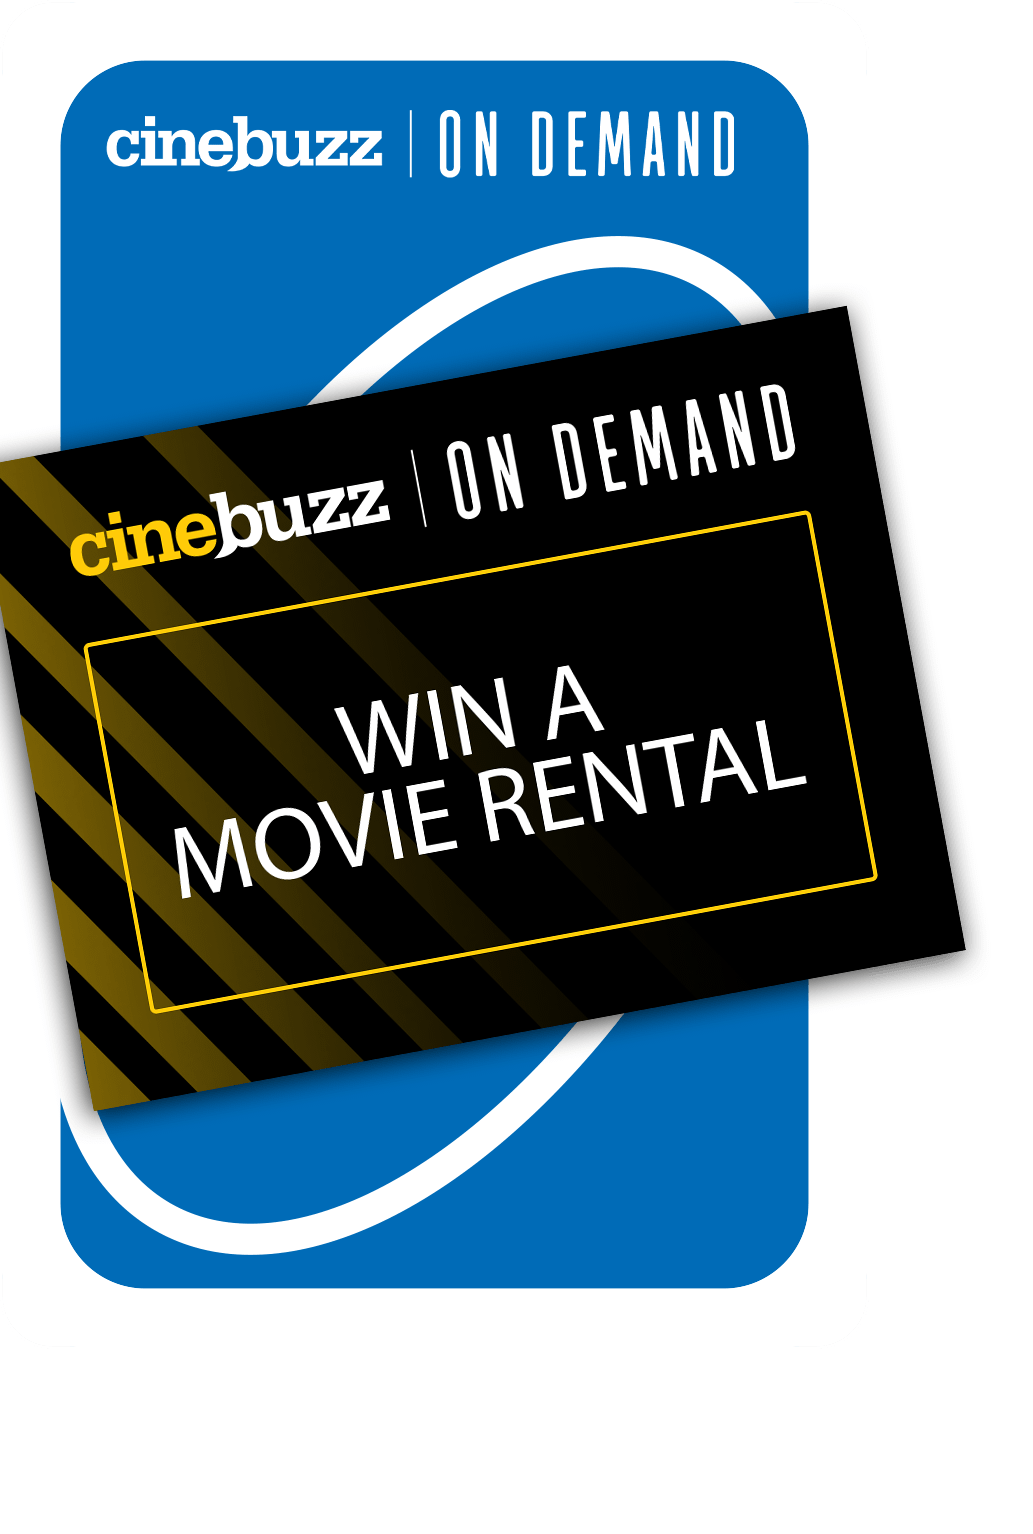 One Free Rental with Cinebuzz On Demand